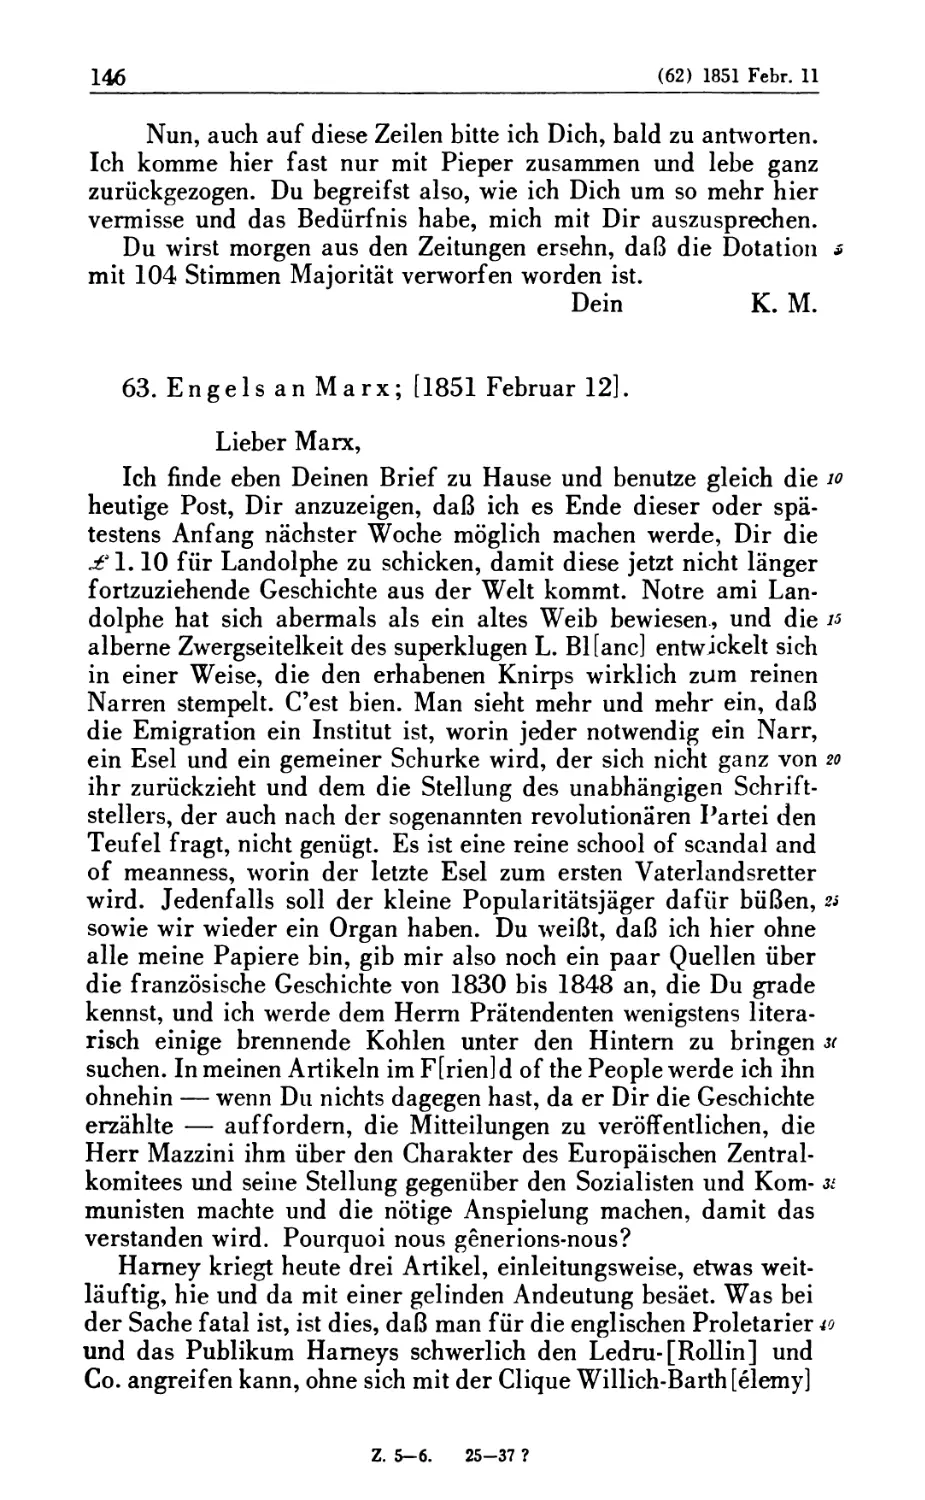 63. Engels an Marx; [1851 Februar 12]